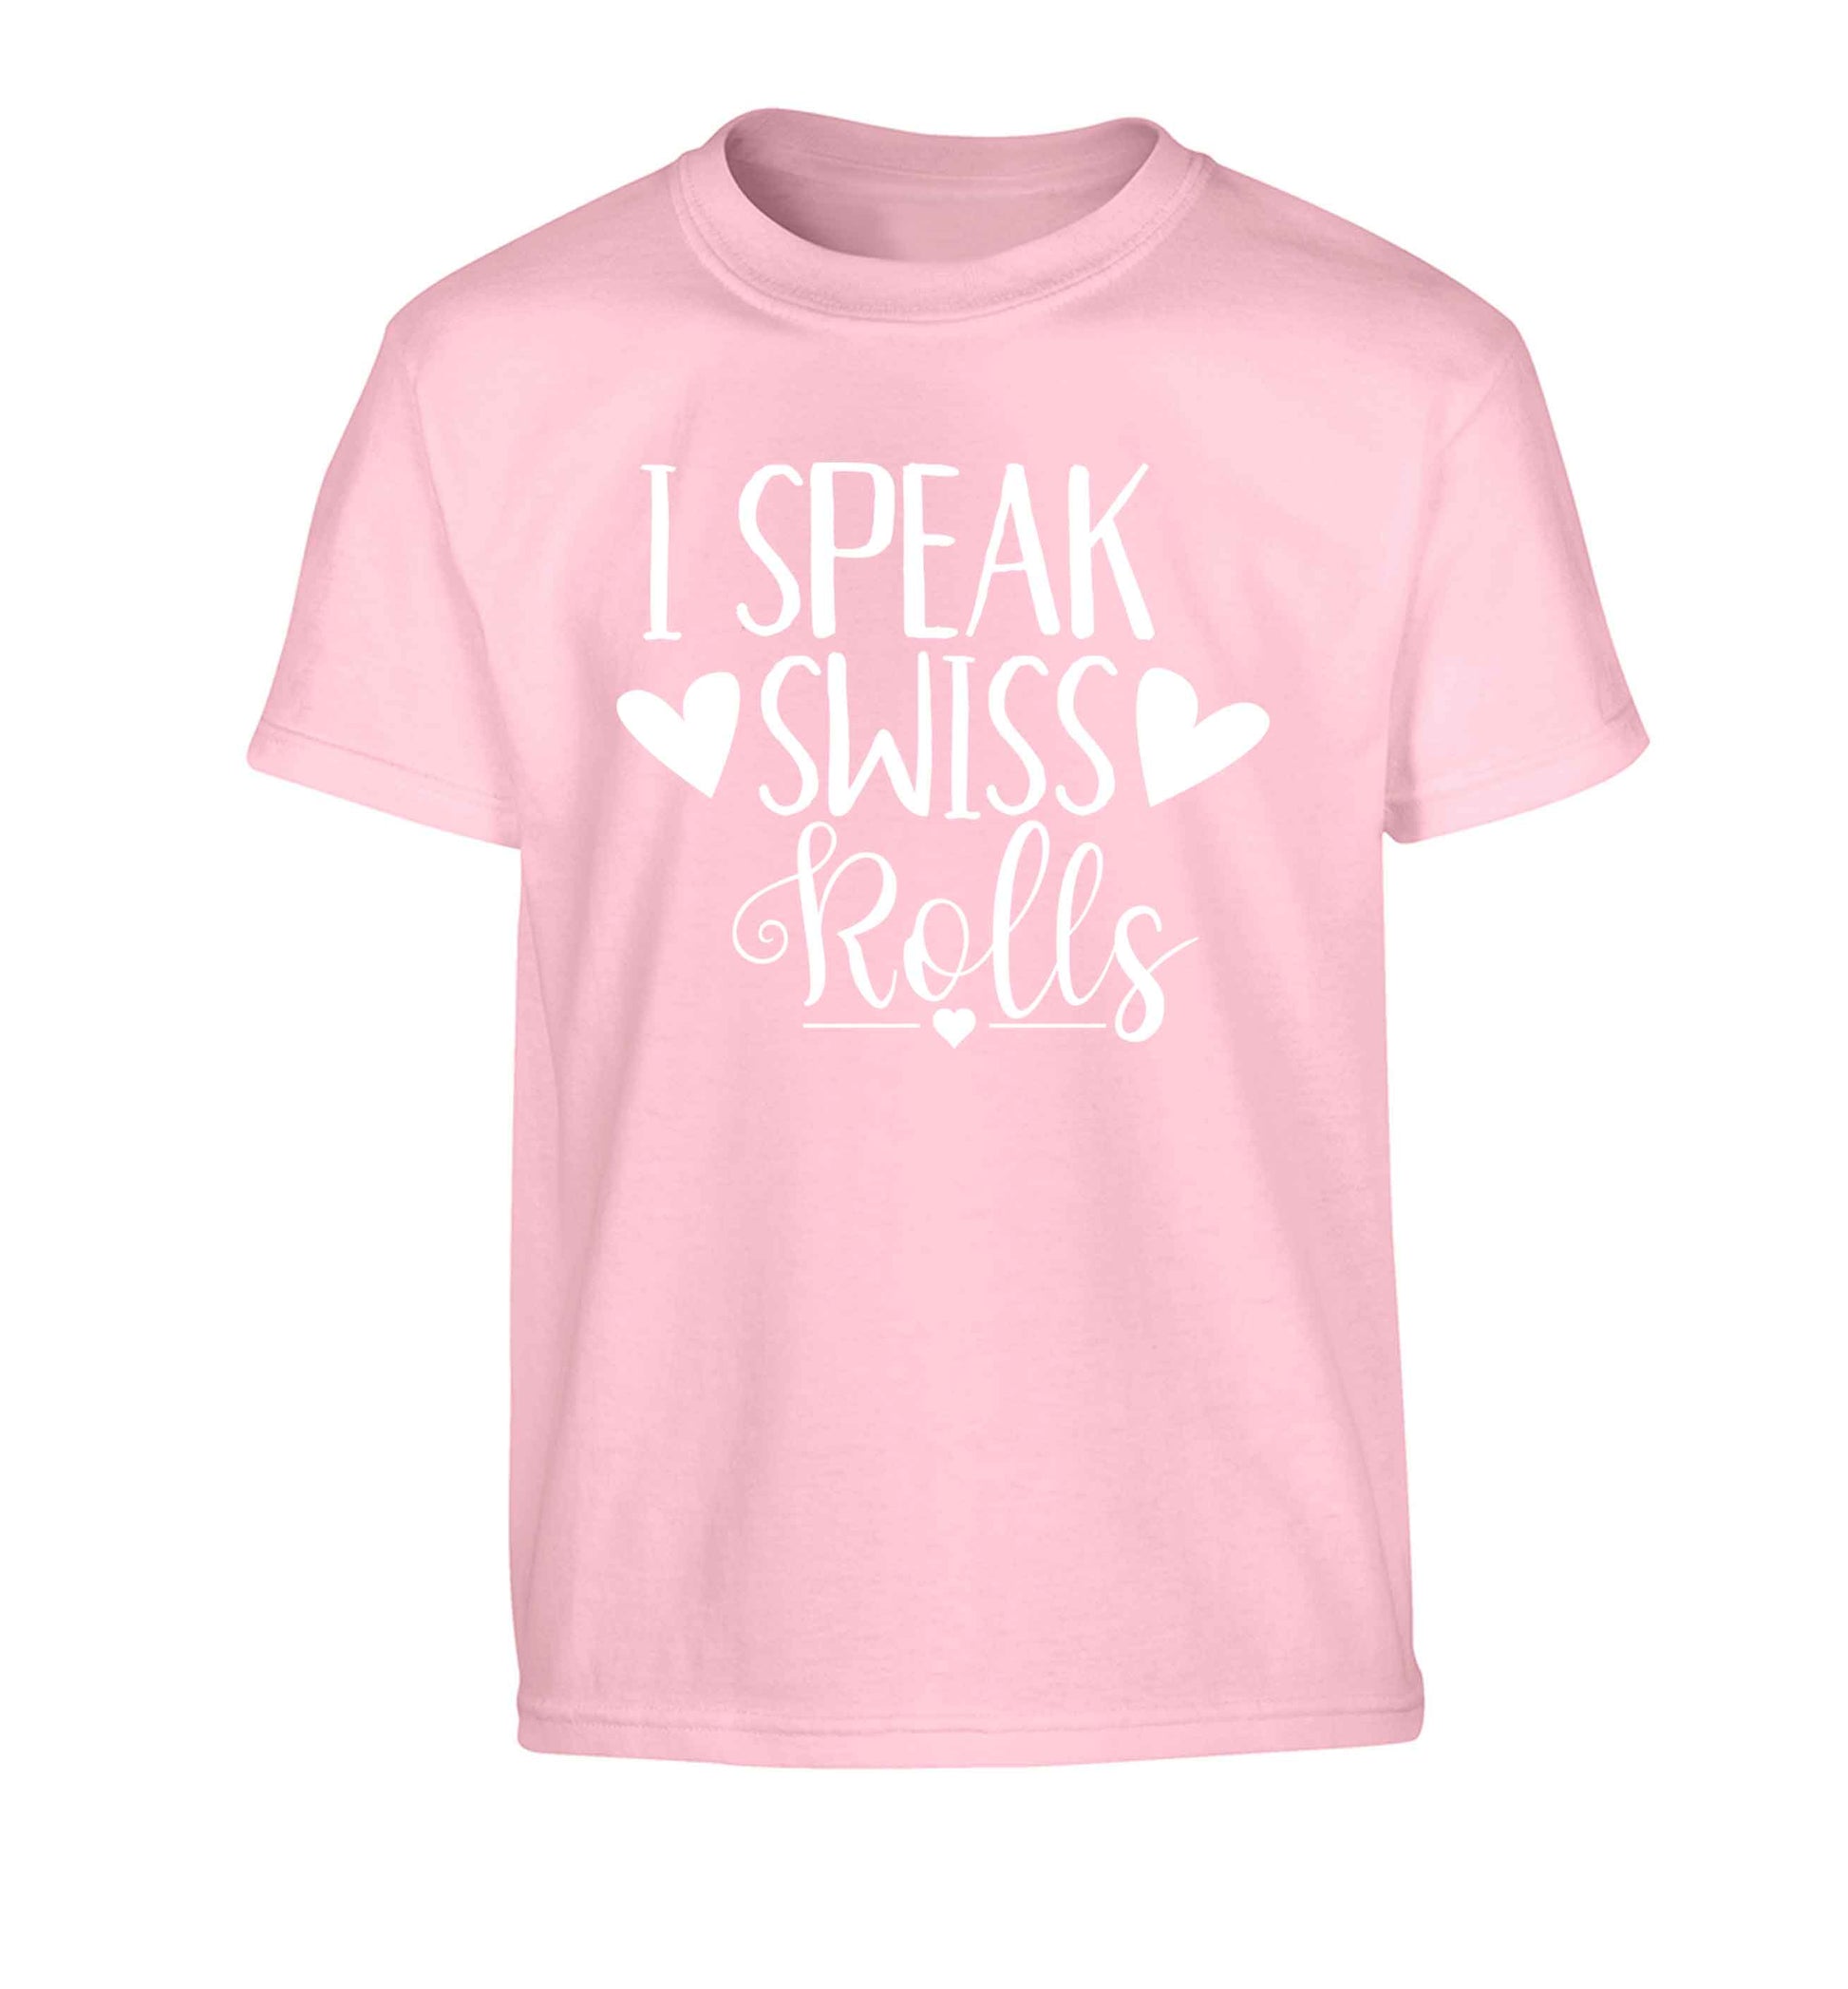 I speak swiss..rolls Children's light pink Tshirt 12-13 Years